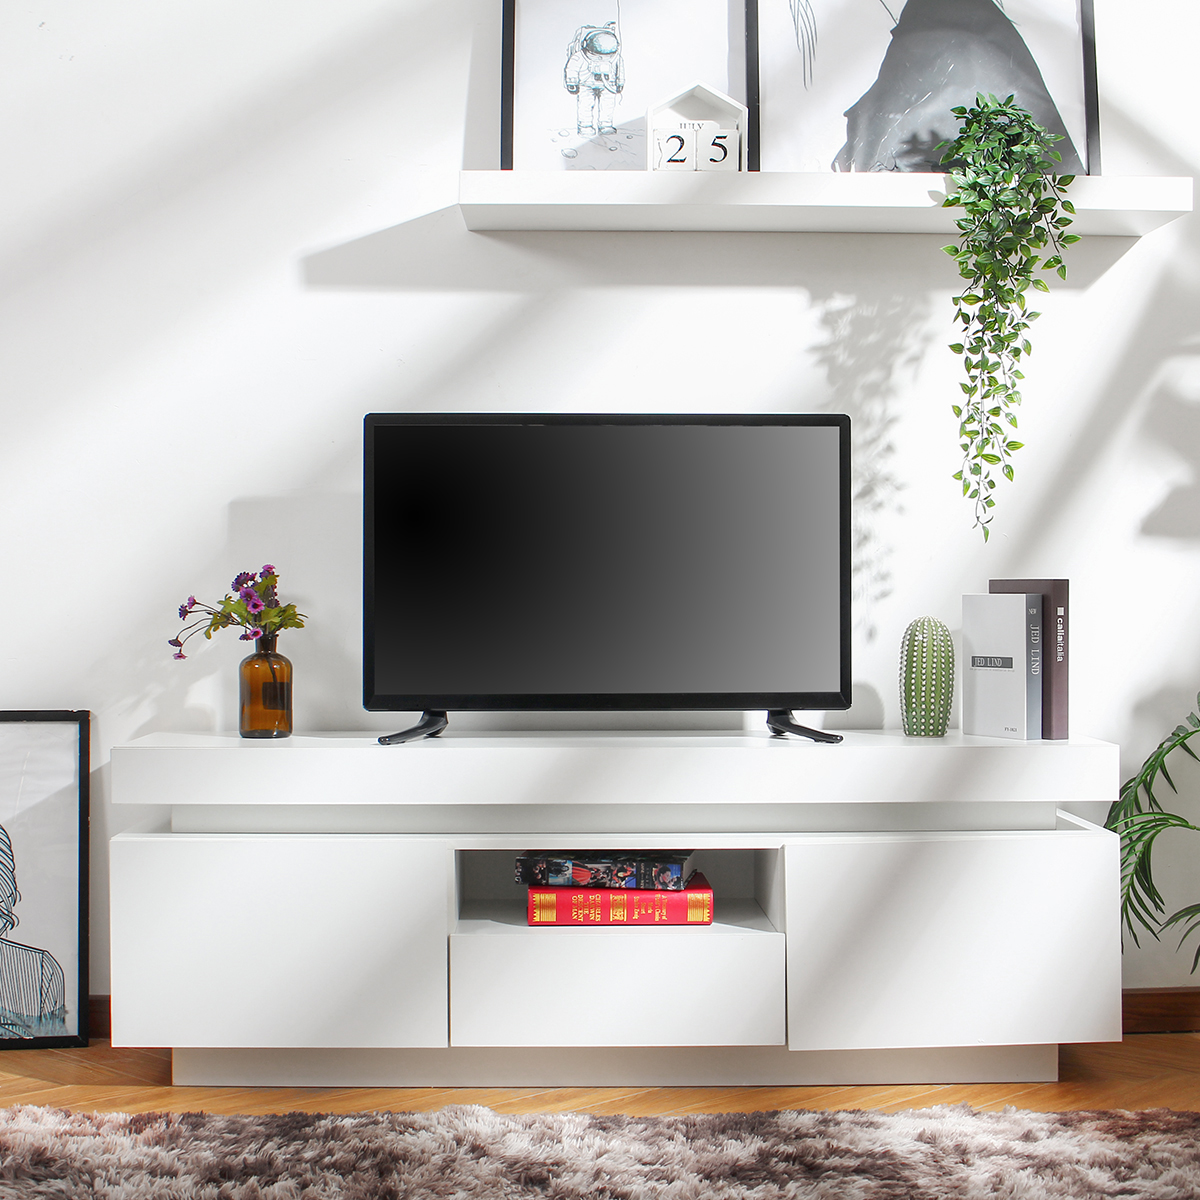 

LED TV Cabinet TV Stand Bookshelf Files Books Storage Shelves with LED Light for Living Room Bedroom Study Office